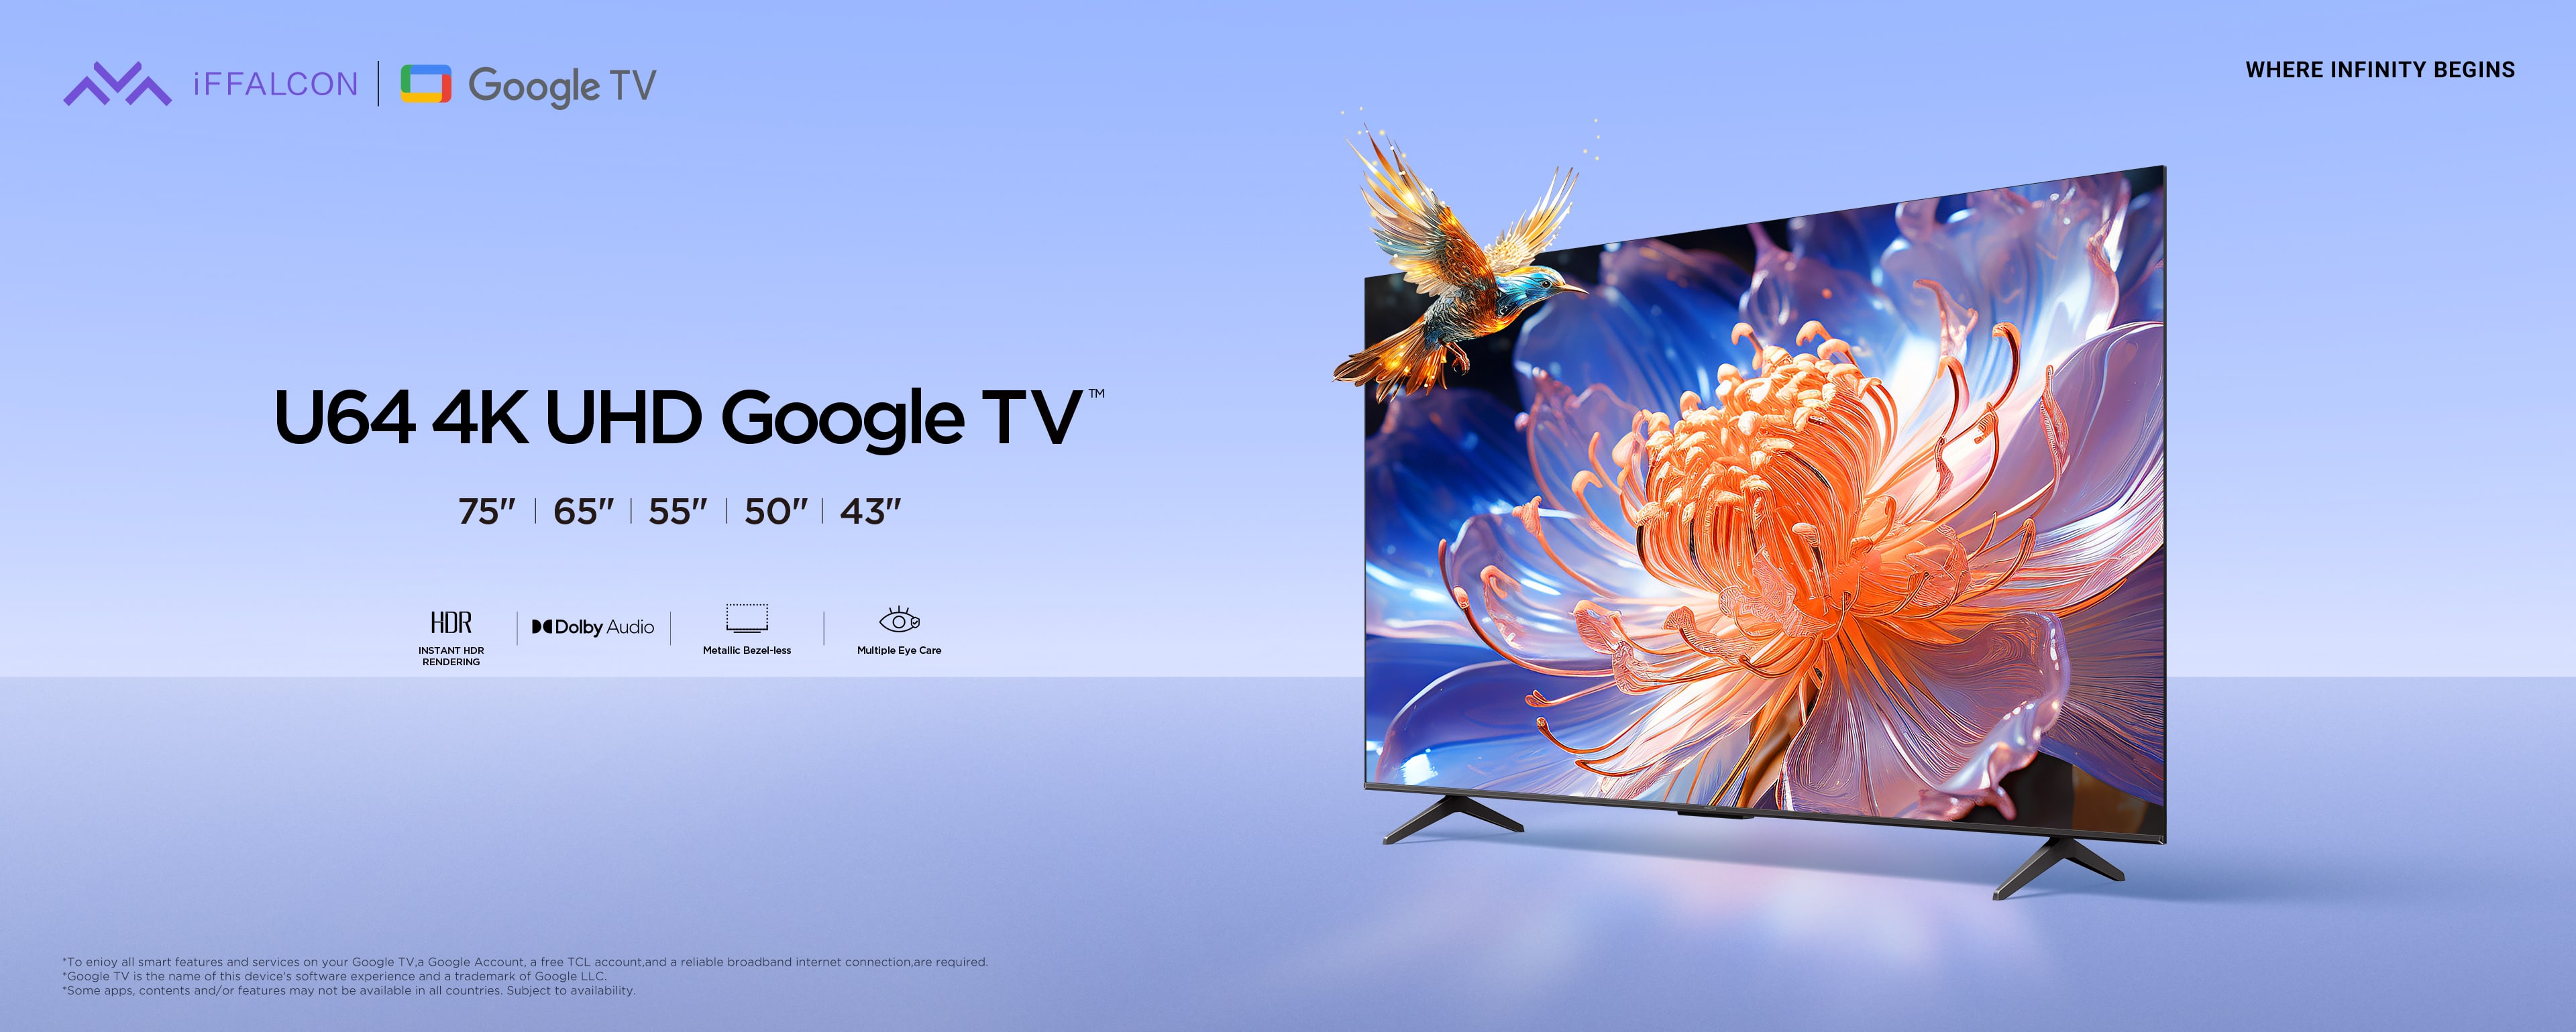 Top banner of  U64 4K UHD Google TV